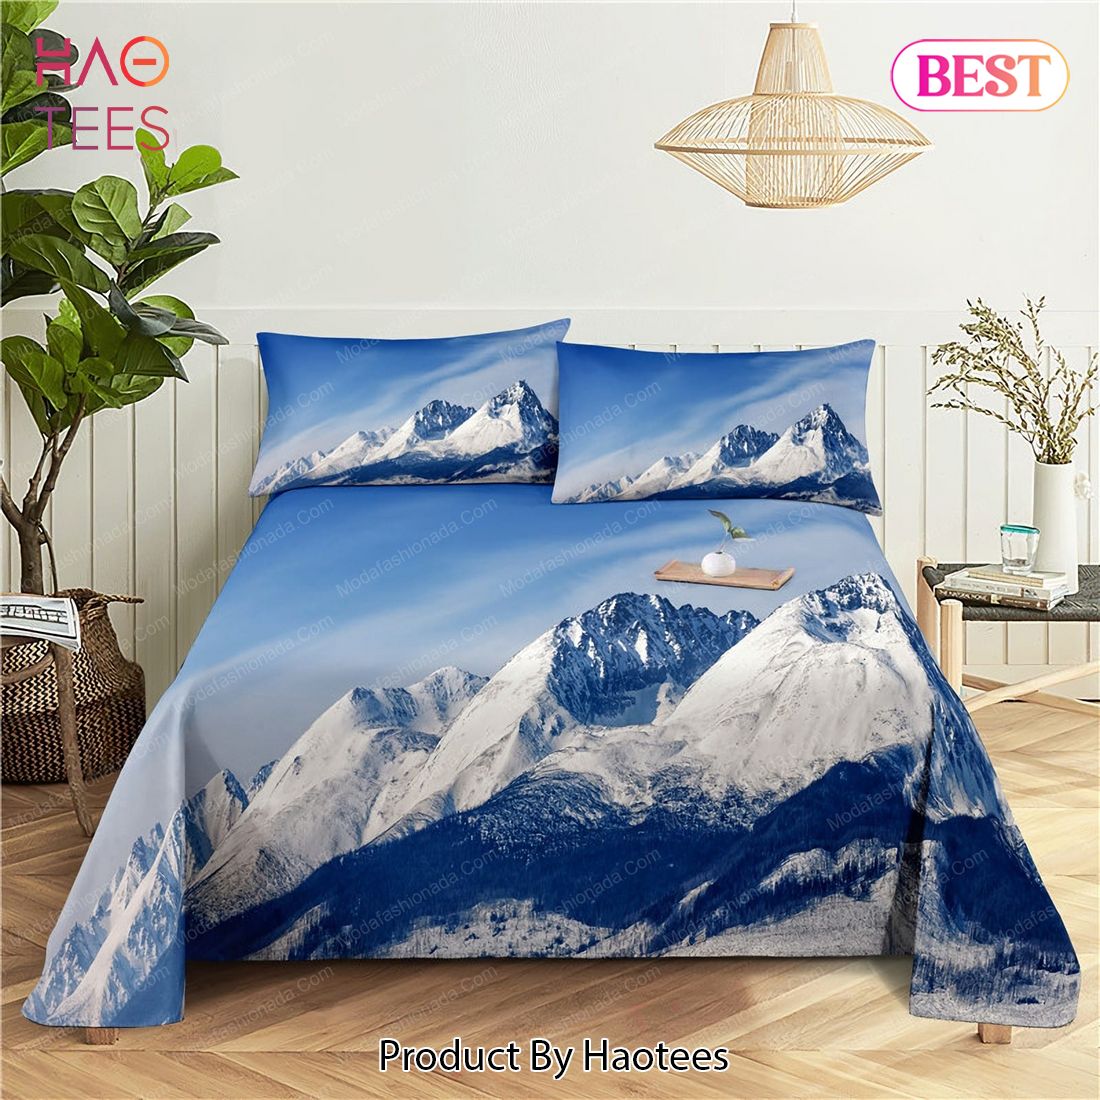 Buy Beautiful Mountain Scenery 268 Bedding Sets Bed Sets, Bedroom Sets, Comforter Sets, Duvet Cover, Bedspread